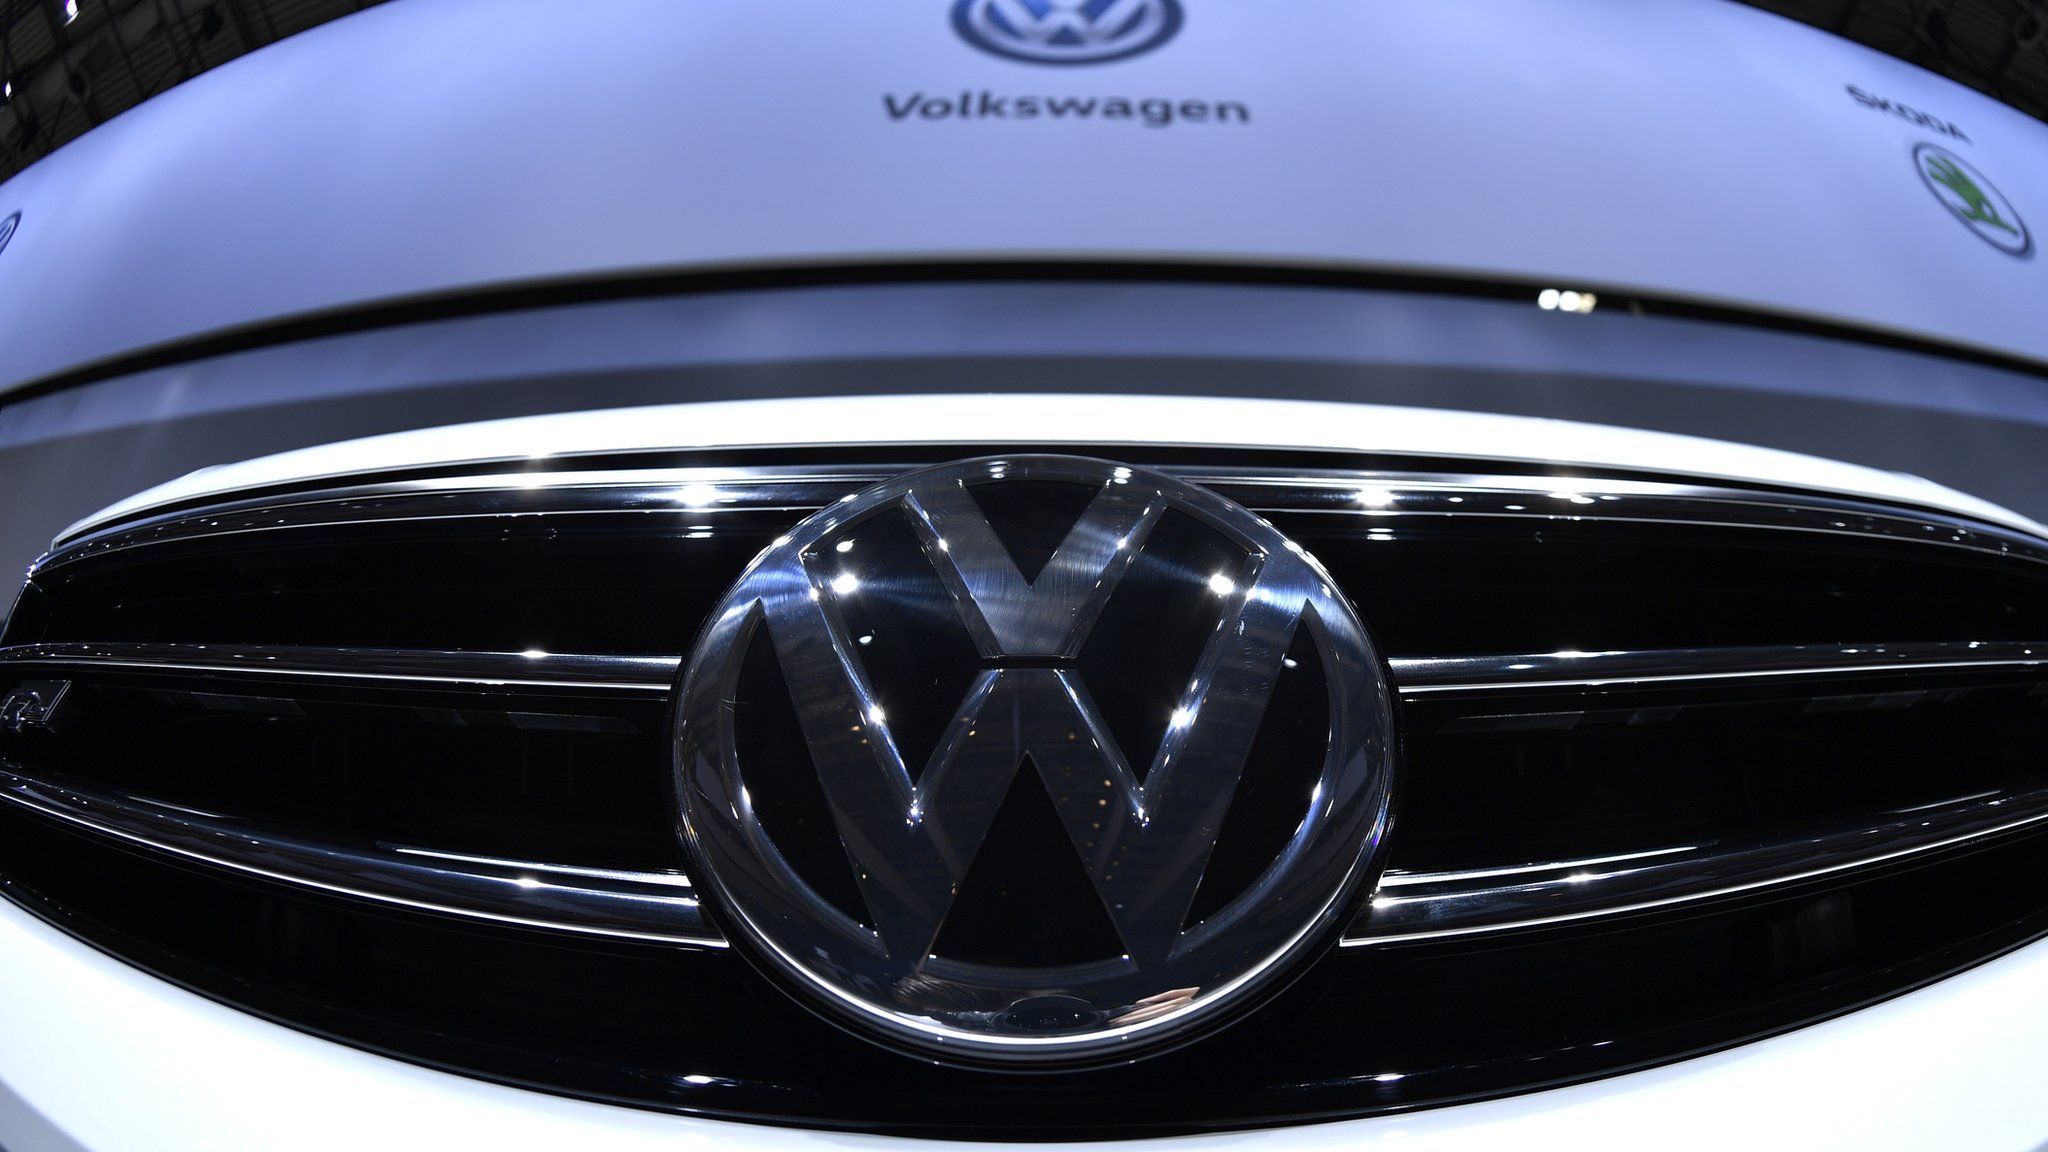 VW faces production delays amid dispute BBC News